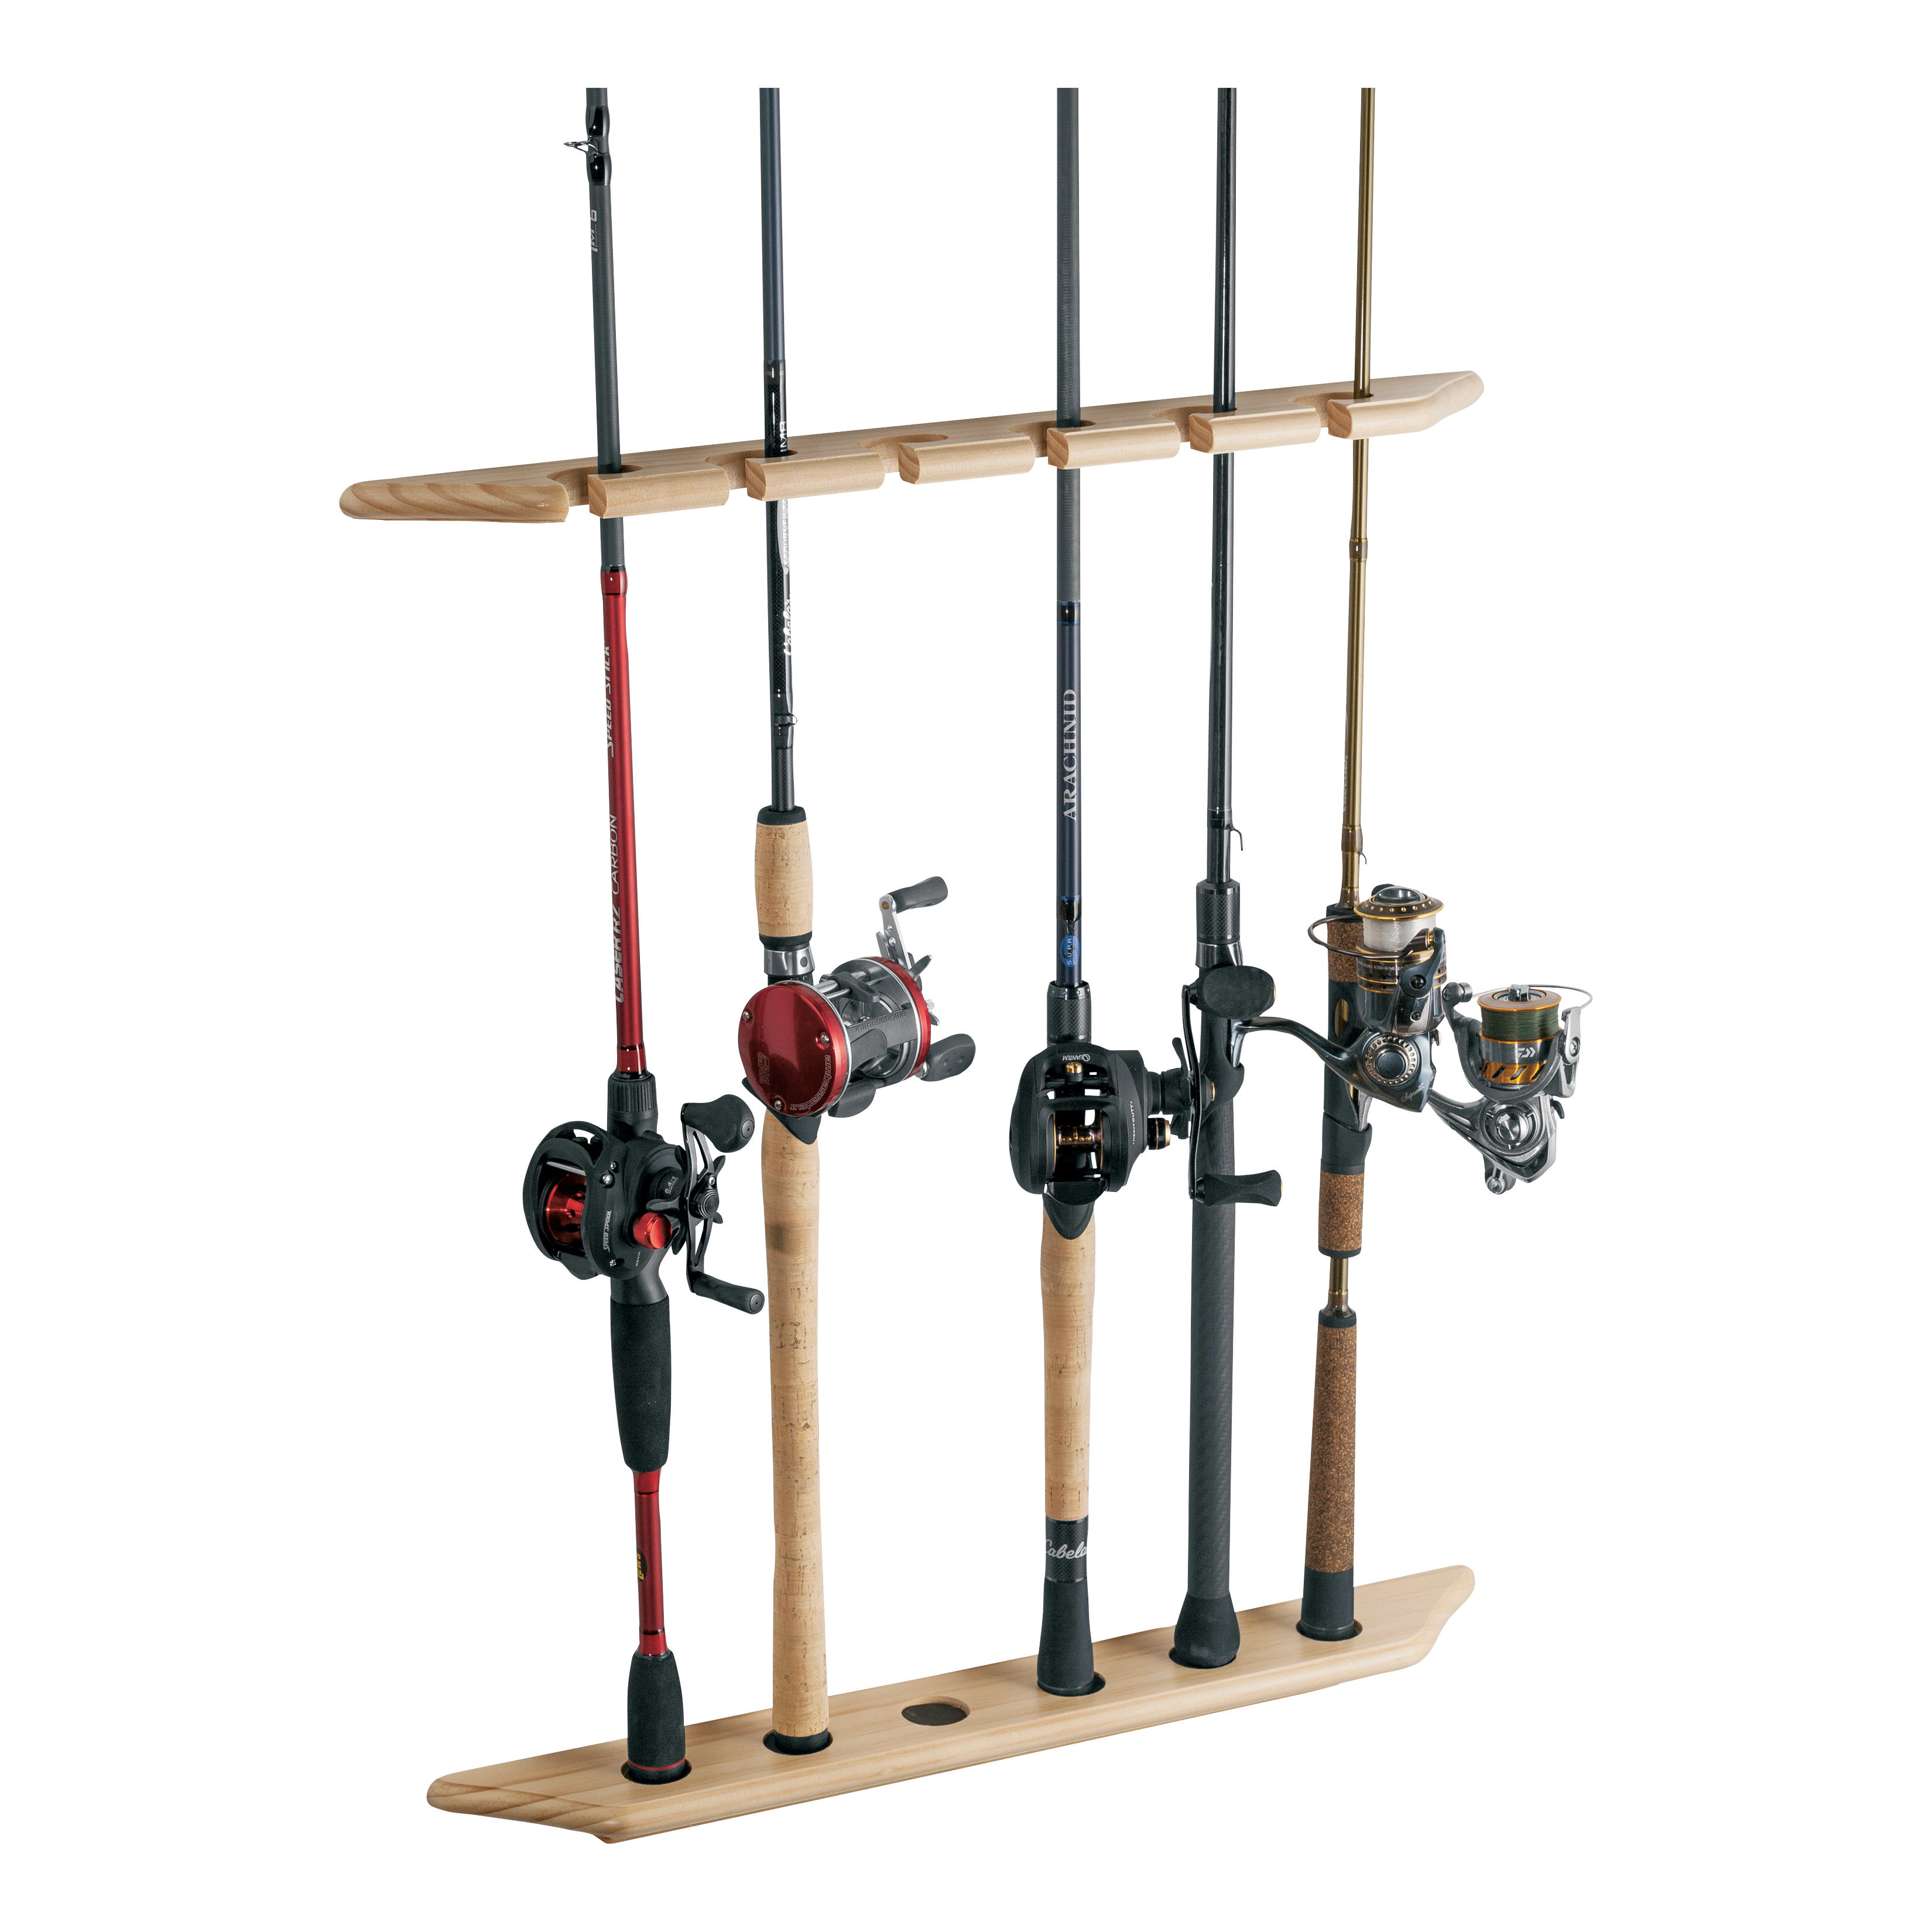 Fishing Rod Storage: Fishing Rod Rack For Storing Rods & Reels